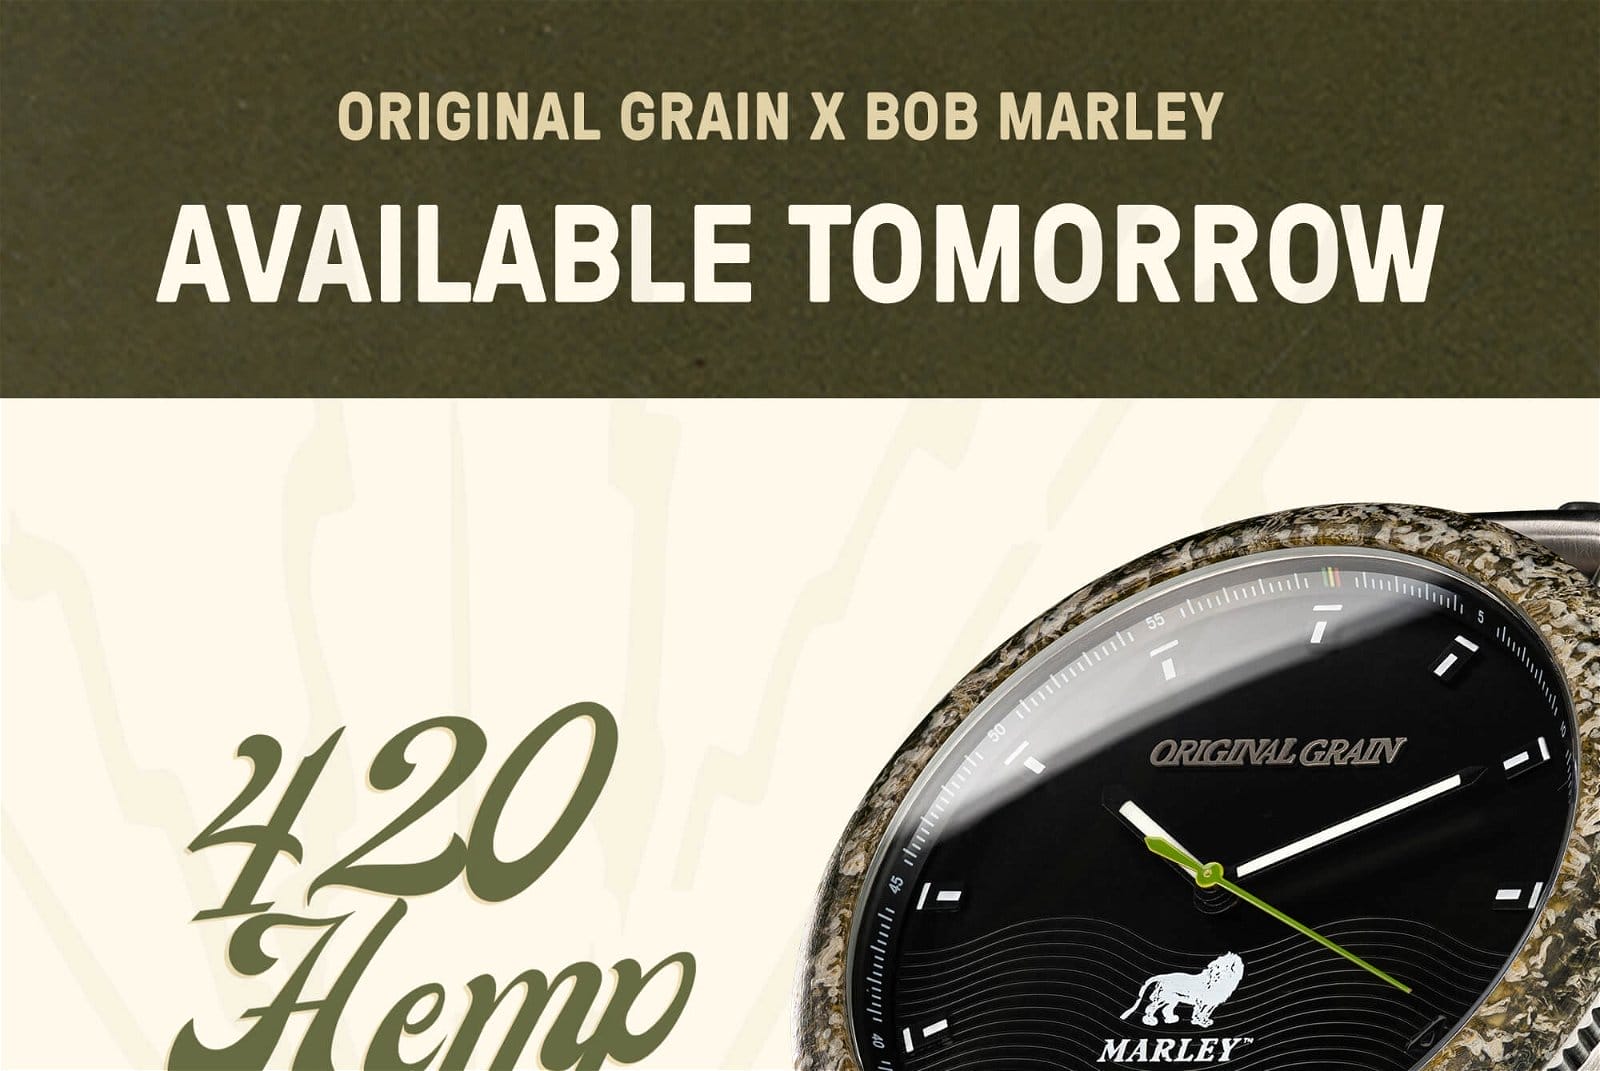 Original Grain x Bob Marley Limited Hemp Watch Coming Soon